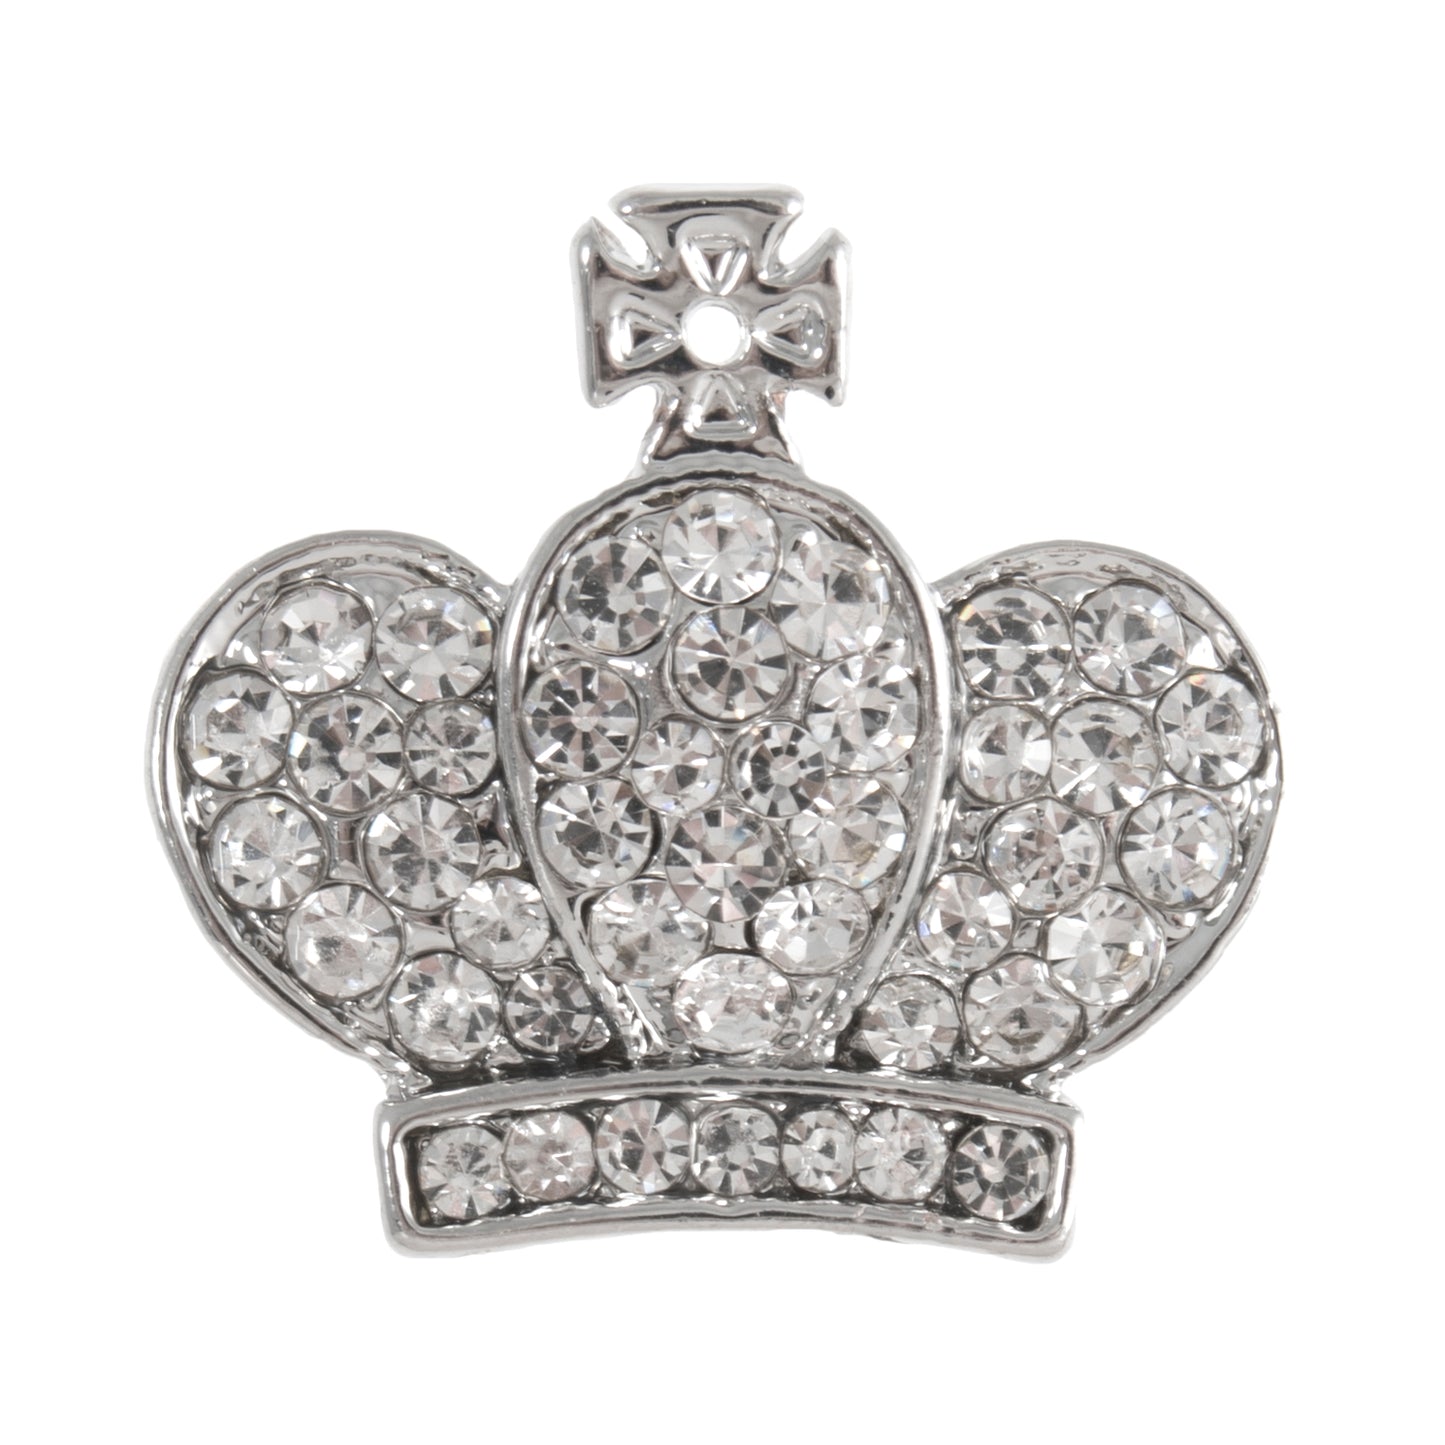 Diamante Crown Shank Button - 24mm - Silver